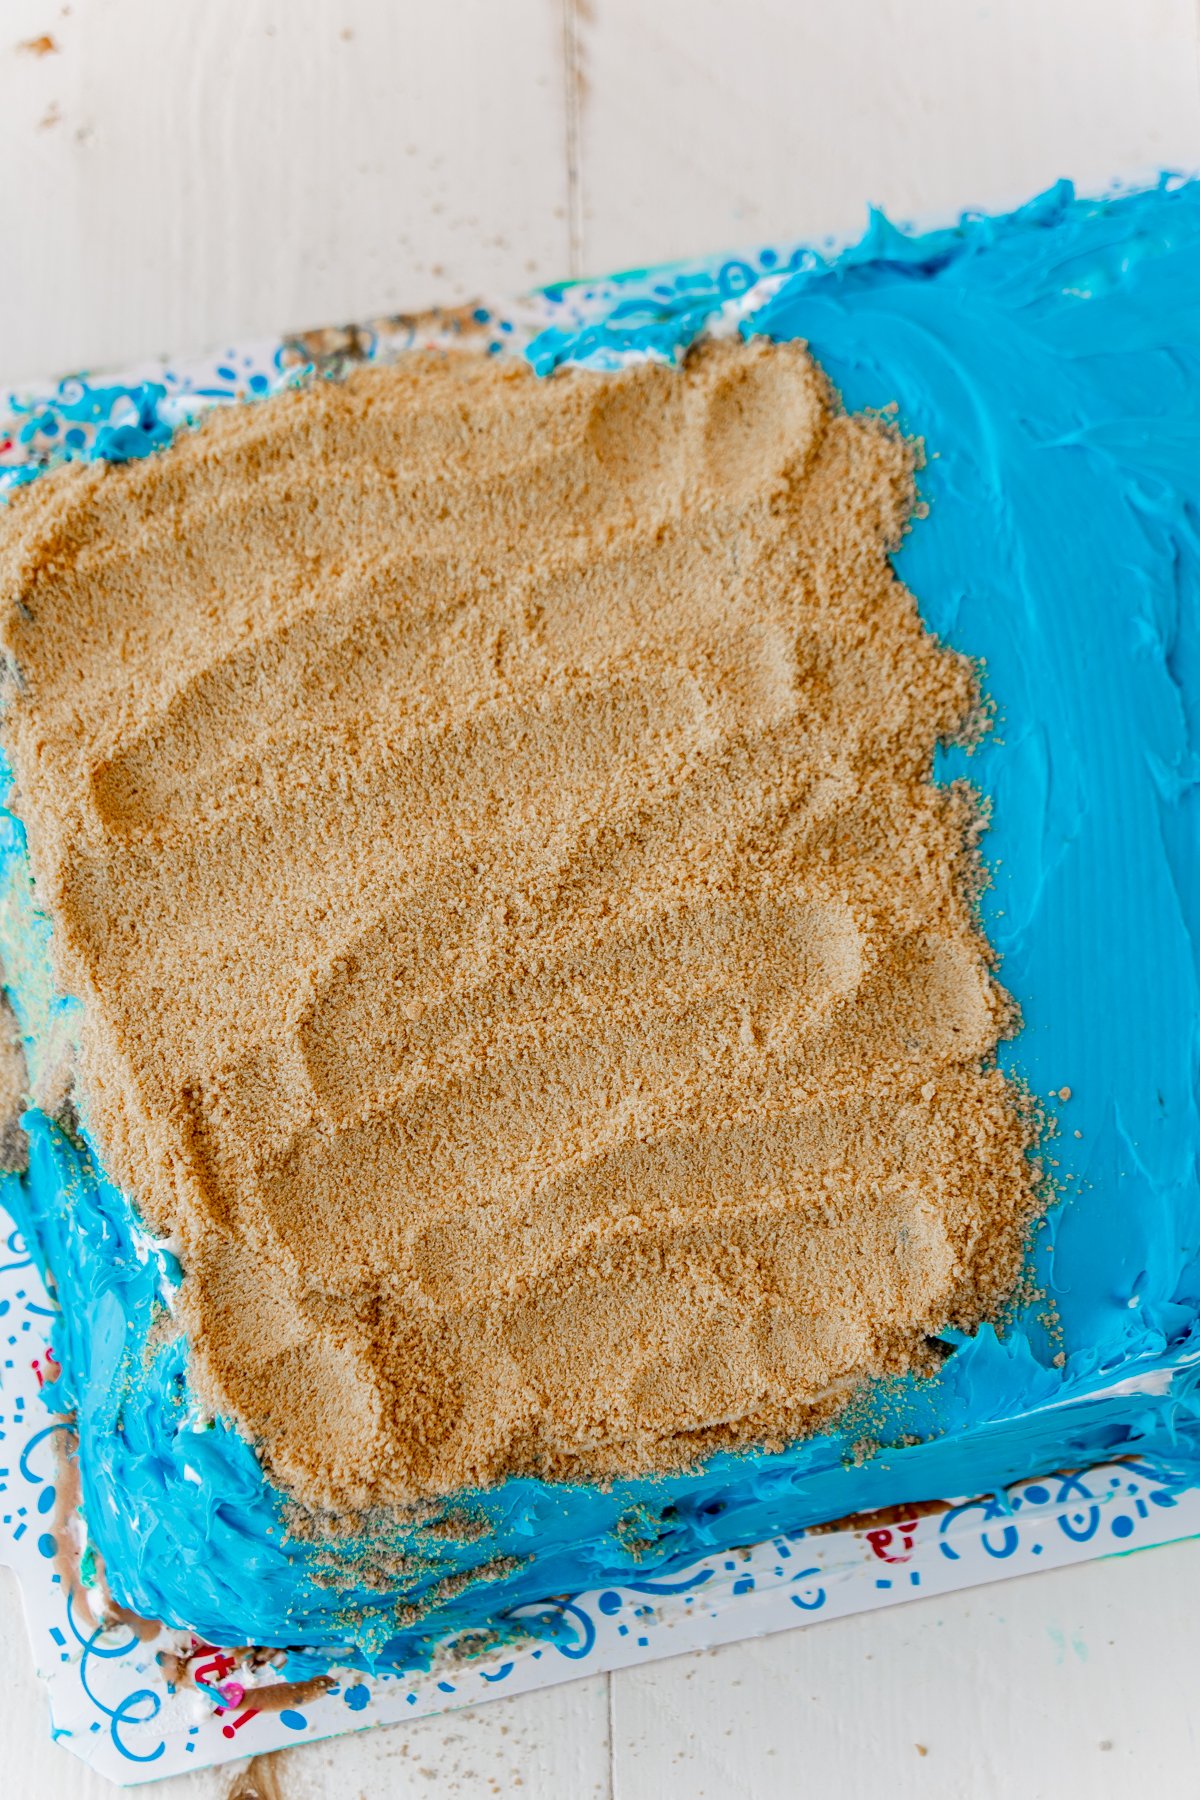 Graham cracker crumbs on an ice cream cake